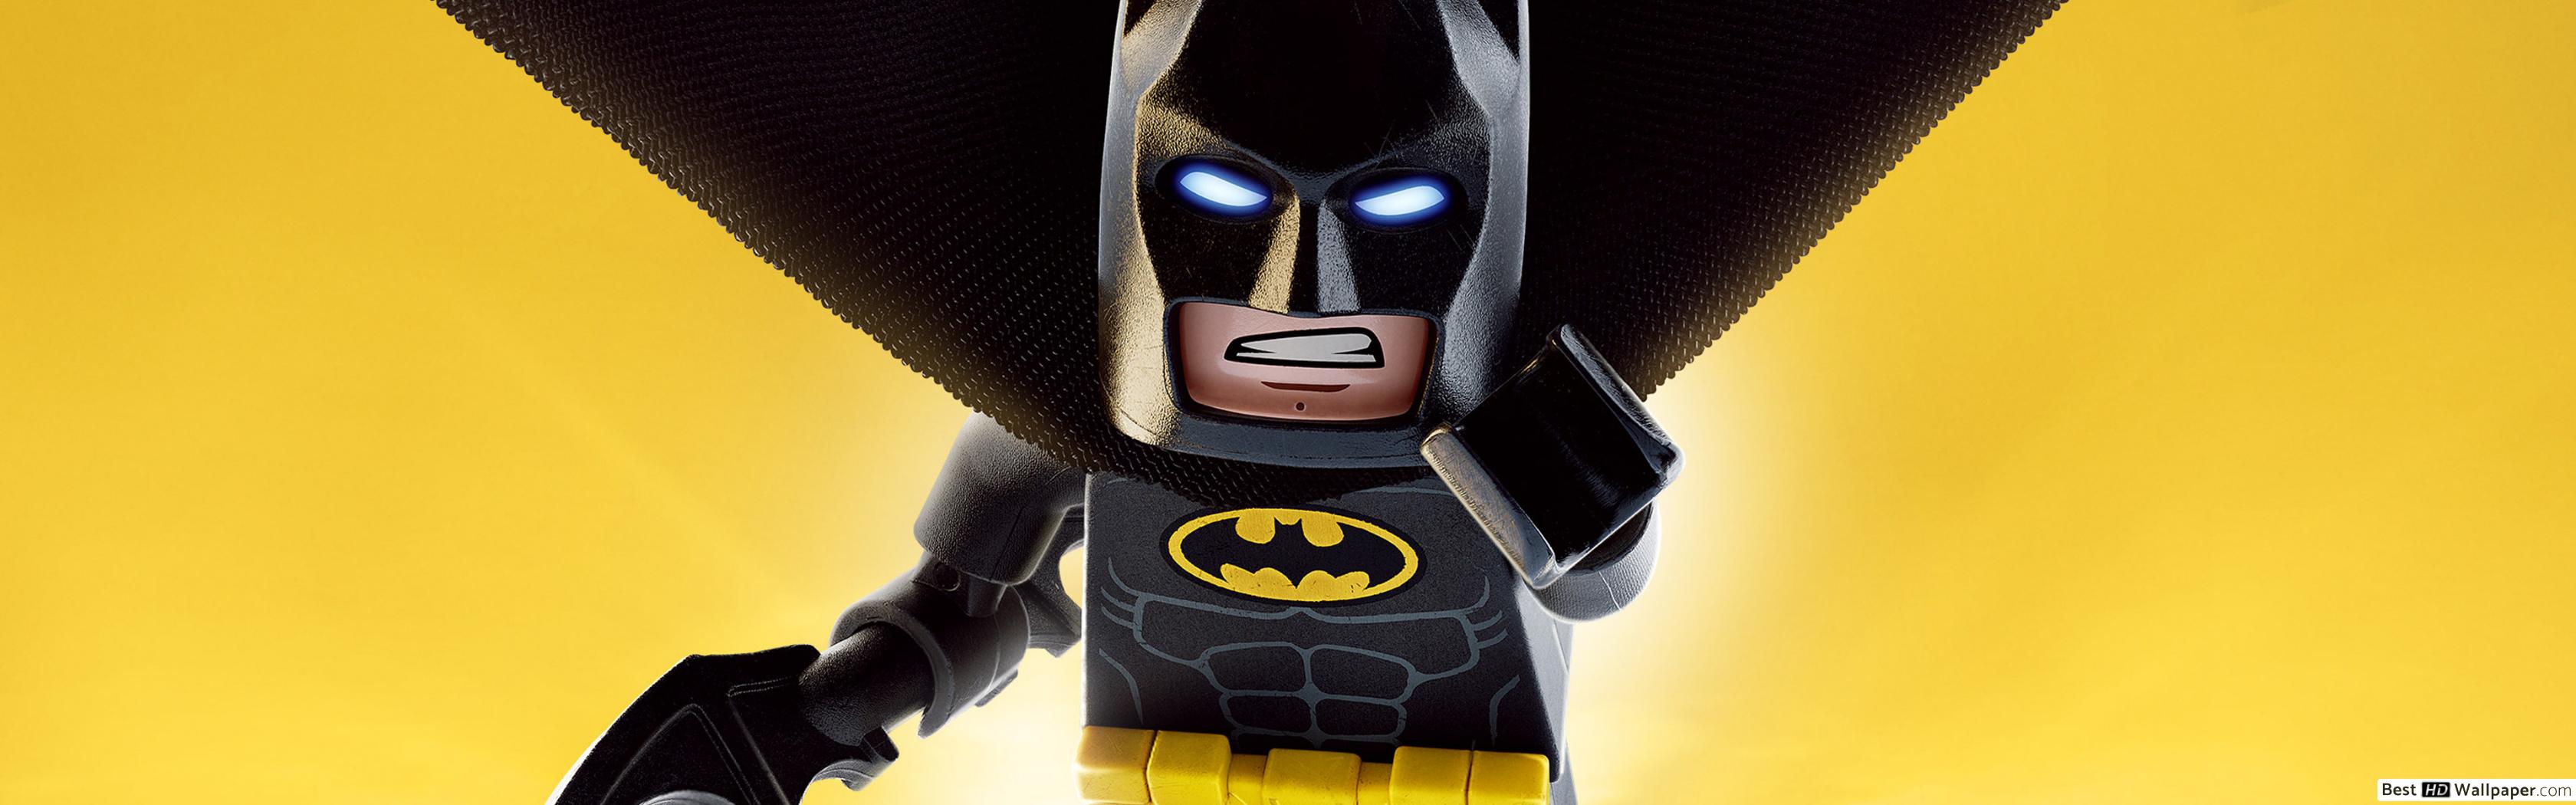 Lego Batman Lego Movie , HD Wallpaper & Backgrounds